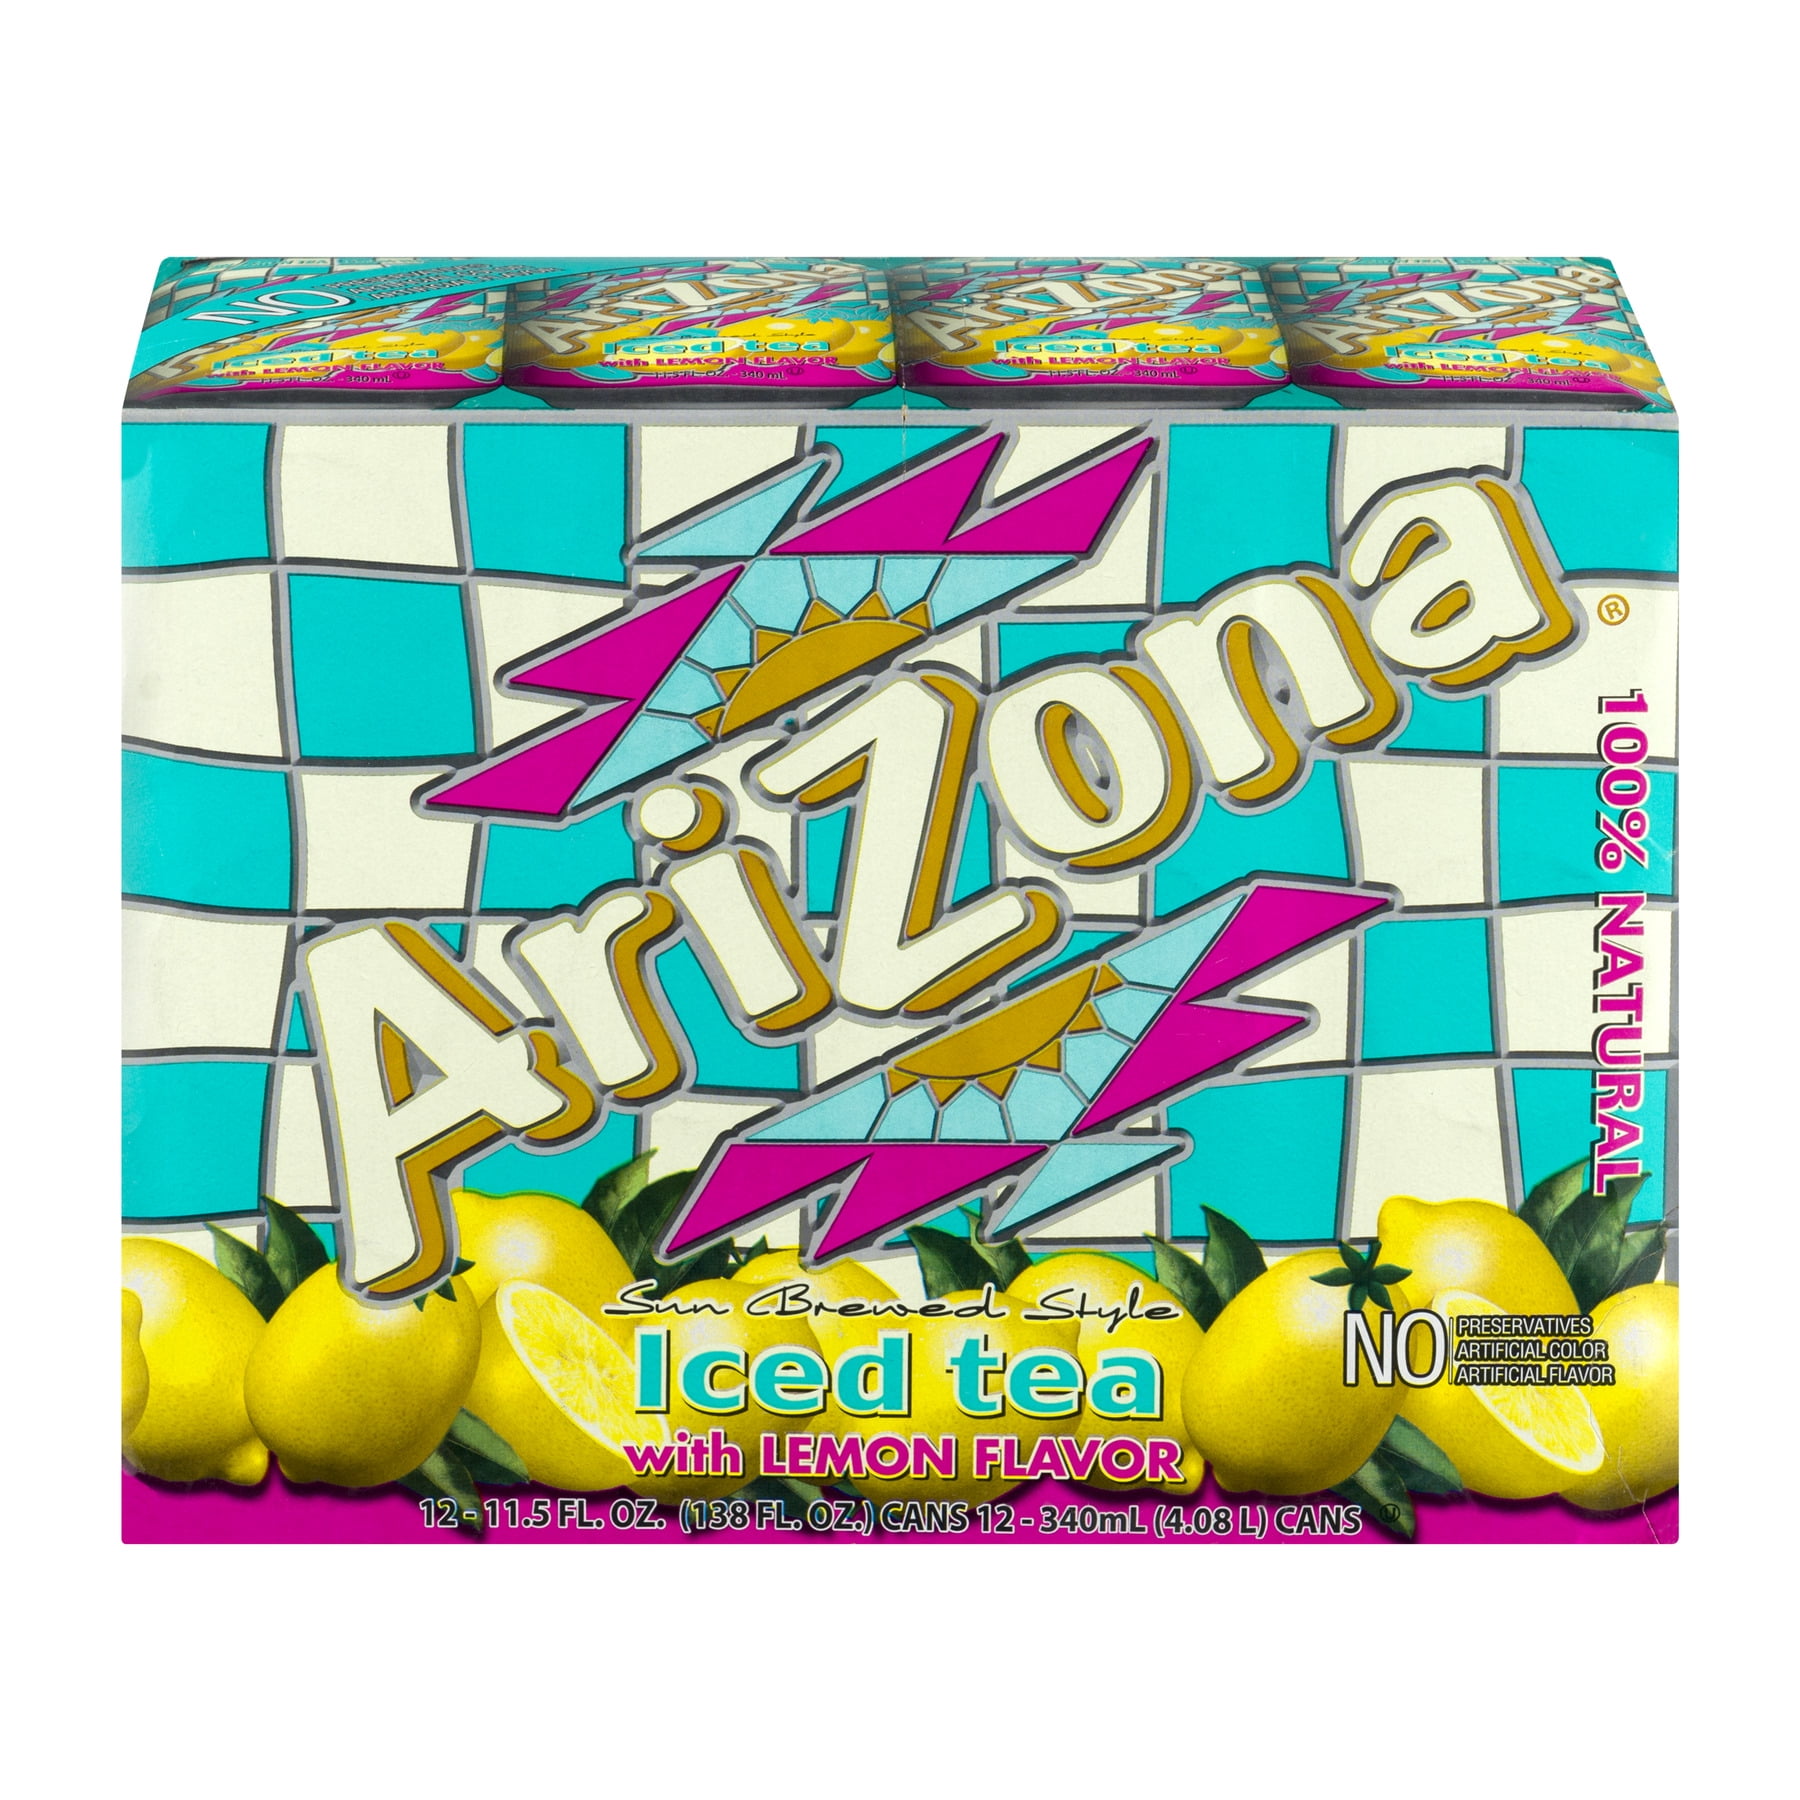 Arizona Iced Tea with Lemon Flavor, 11.5 Fl. Oz., 12 Count 